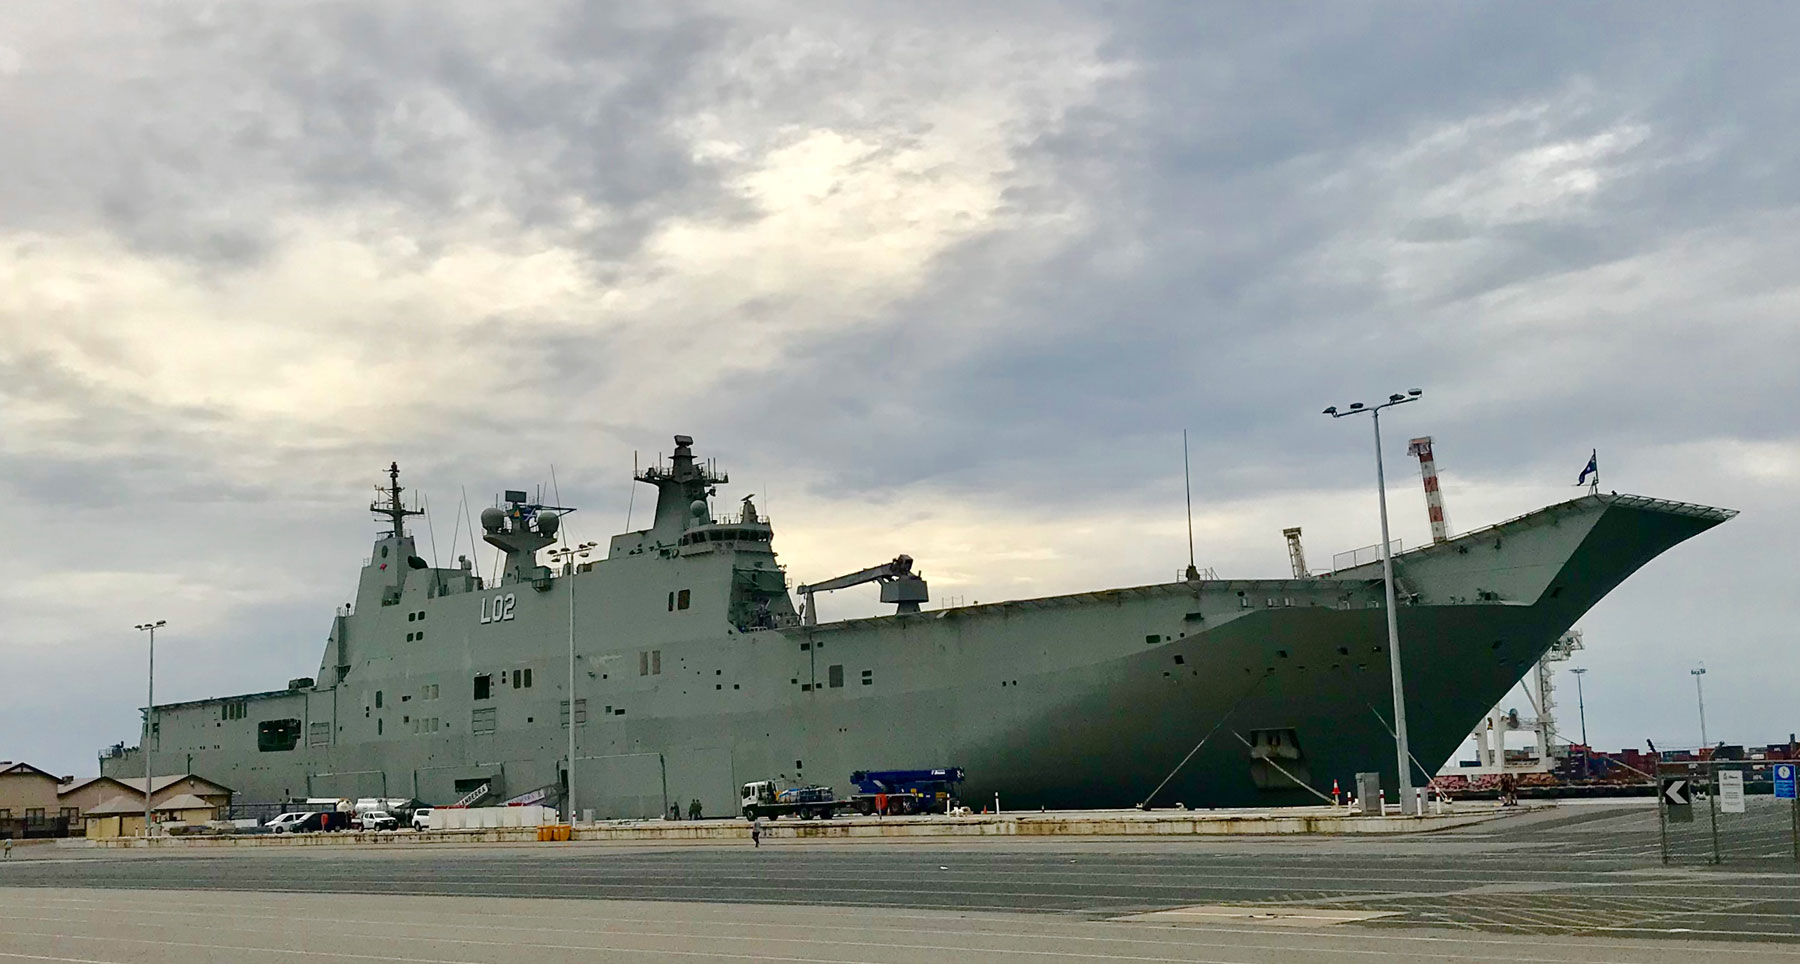 HMAS Canberra - Ships in Fremantle Port - Fremantle Shipping News1800 x 964